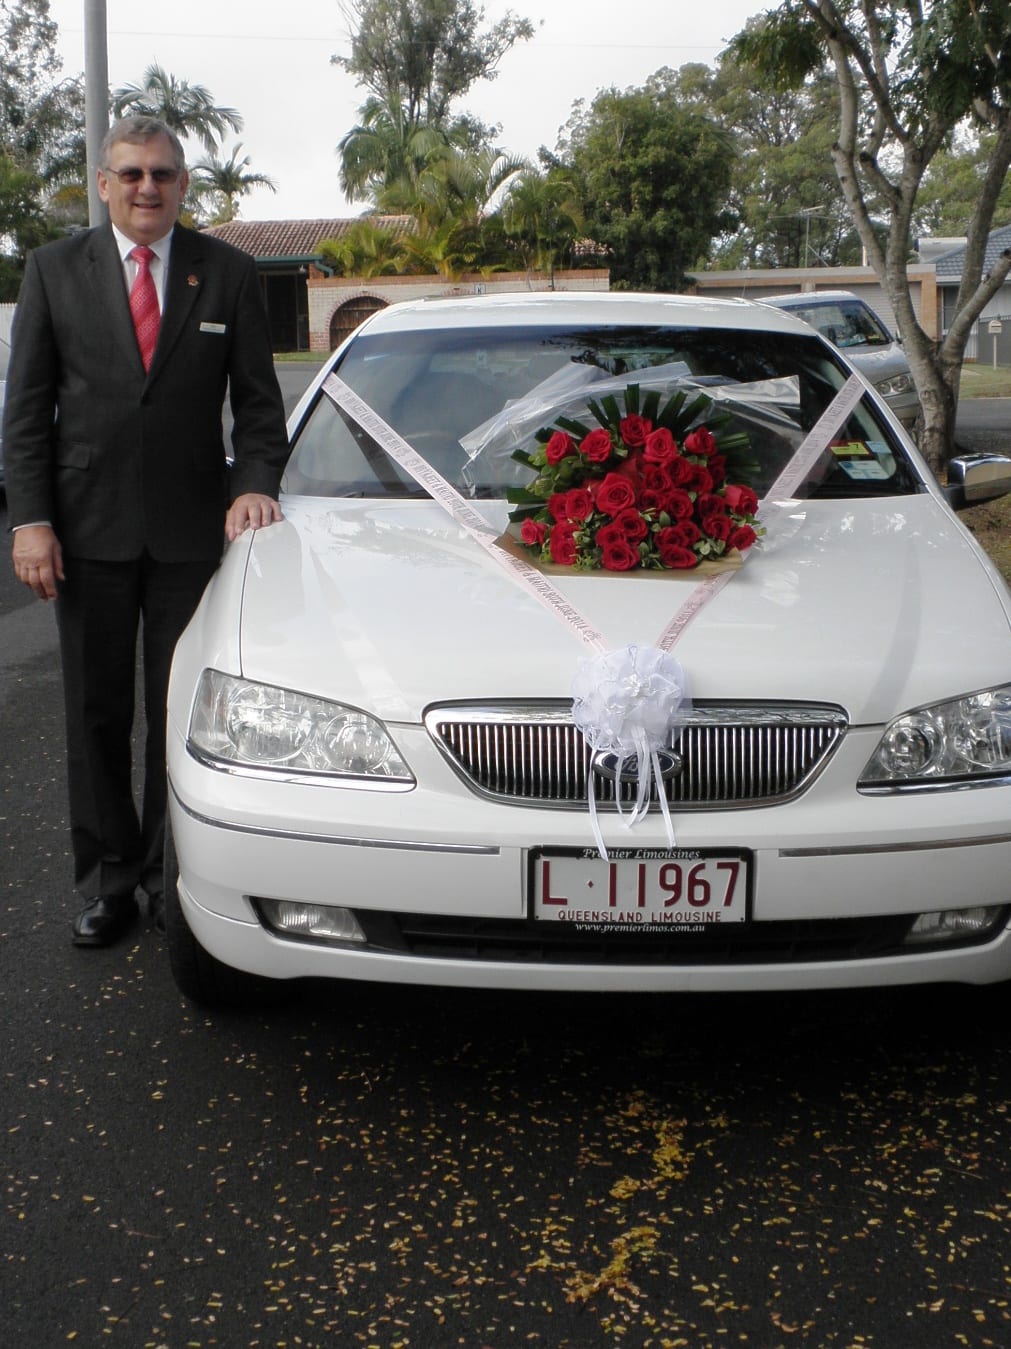 Chauffeured Wedding Cars Brisbane Super Stretch